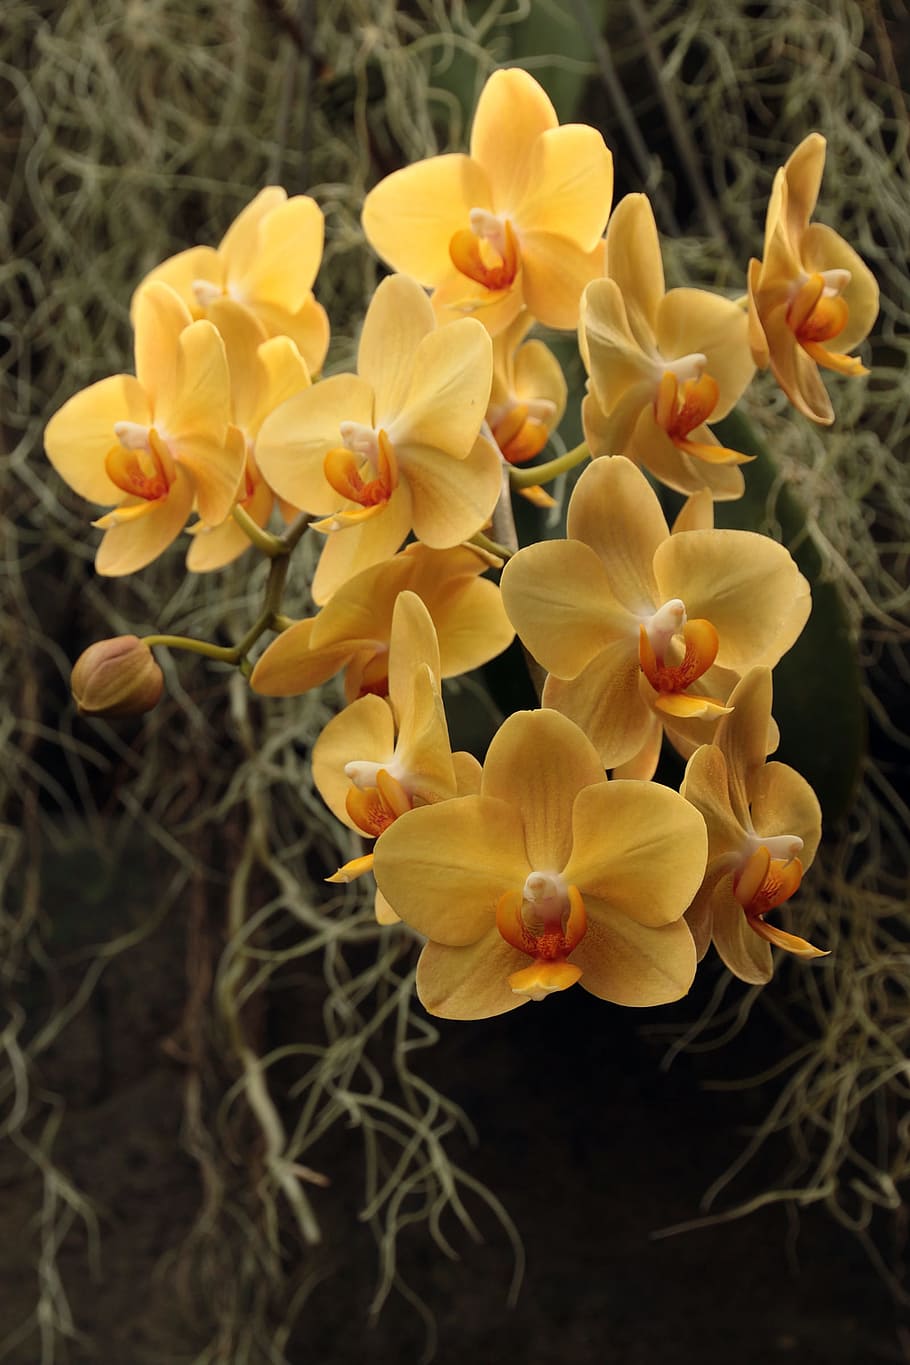 kuning, bunga anggrek phalaenopsis, anggrek ngengat, berbunga, rumah kaca, musim dingin, dikelilingi, lumut Spanyol, lumut., anggrek phalaenopsis kuning